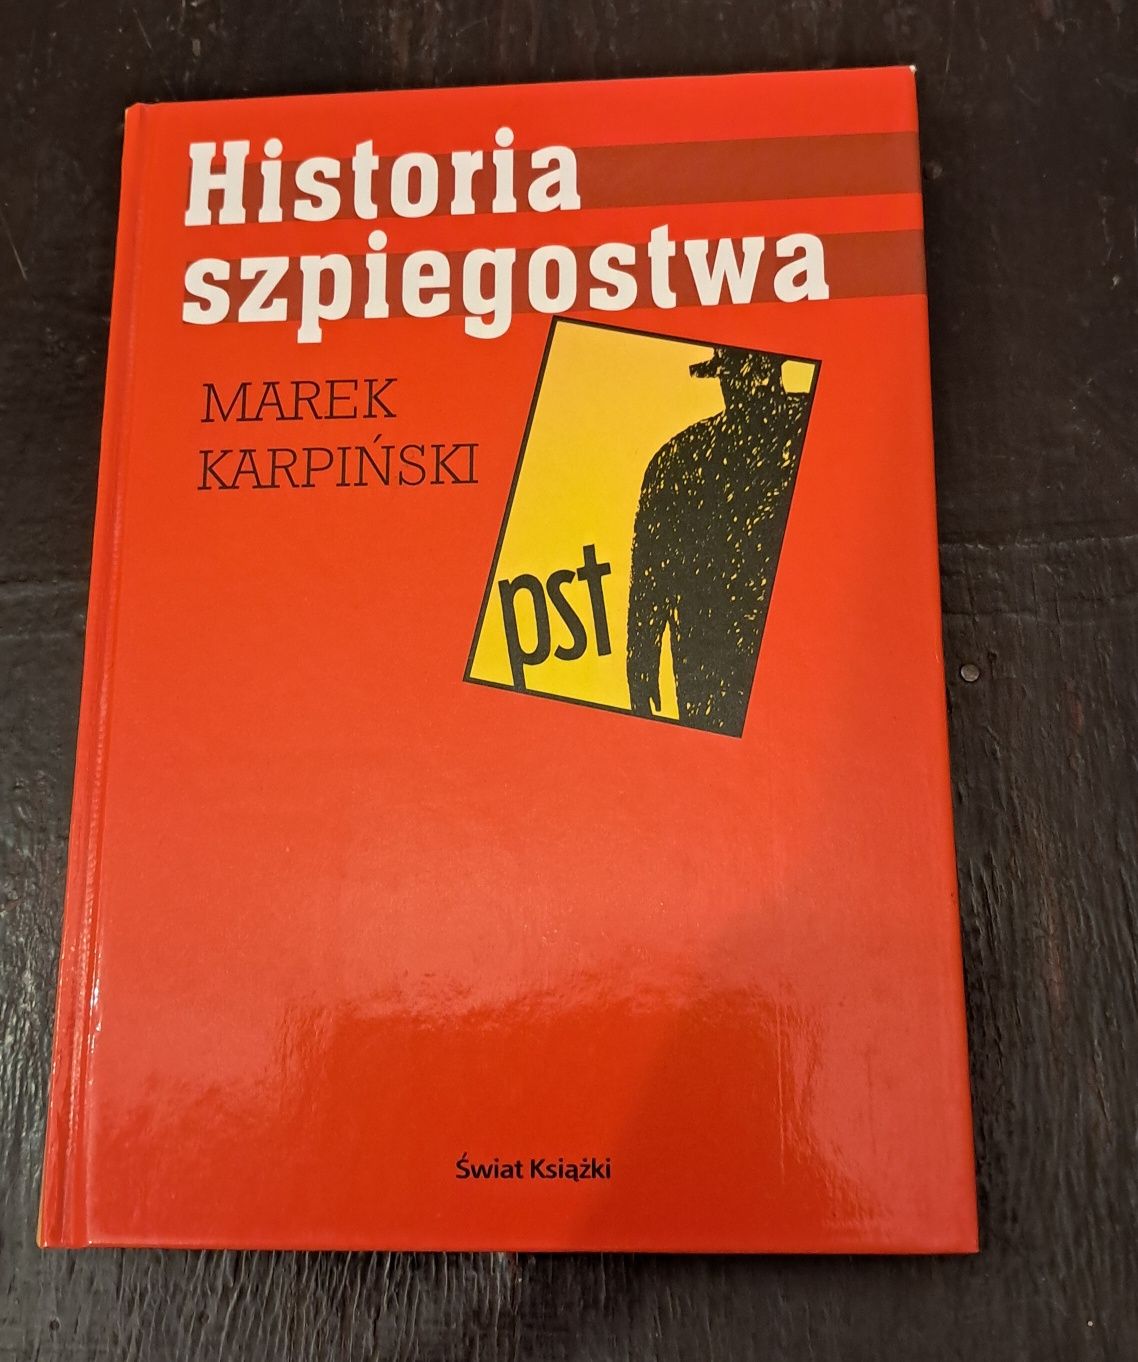 Historia szpiegowstwa - Marek Karpiński